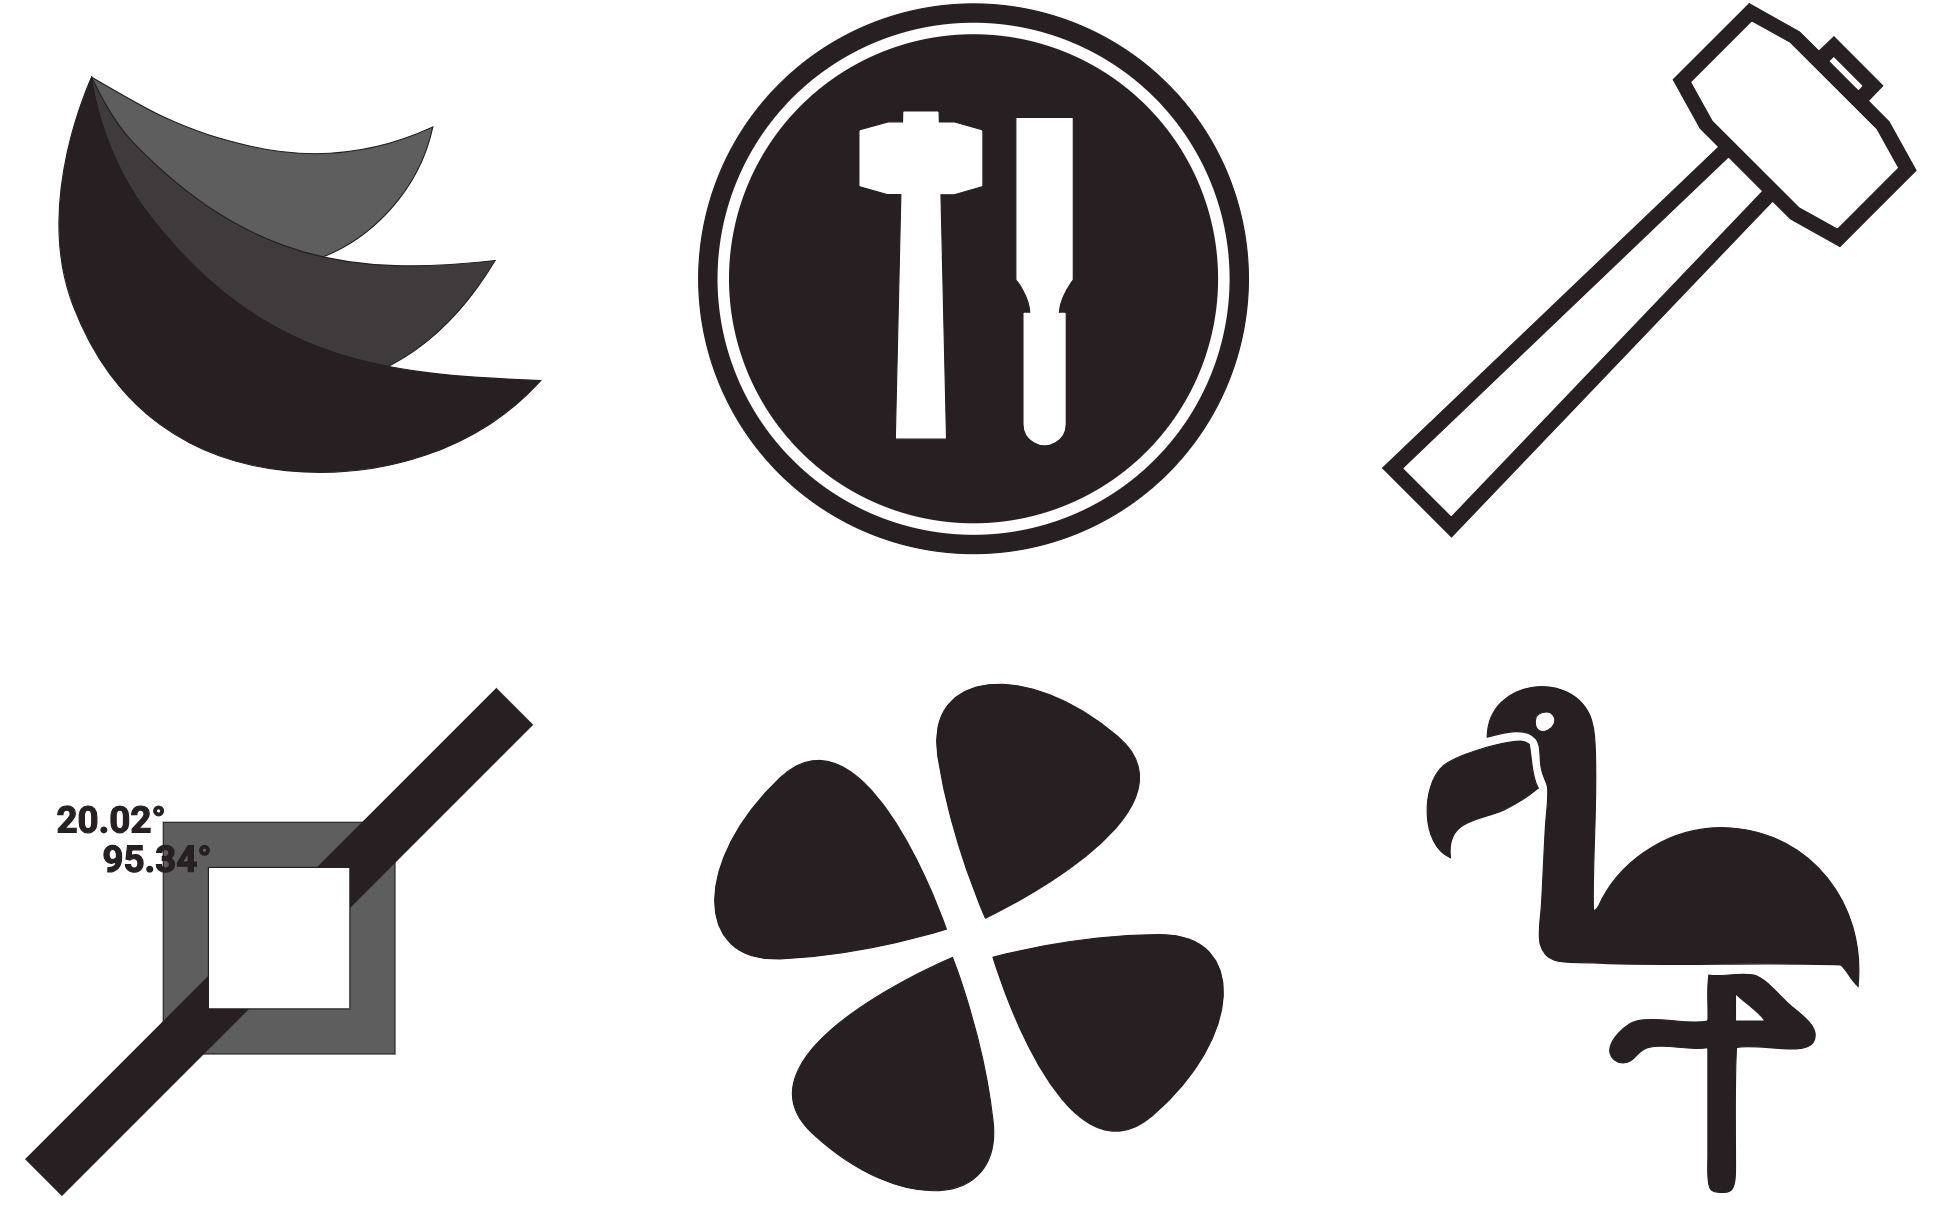 A sample of logos taken from Logos With Design